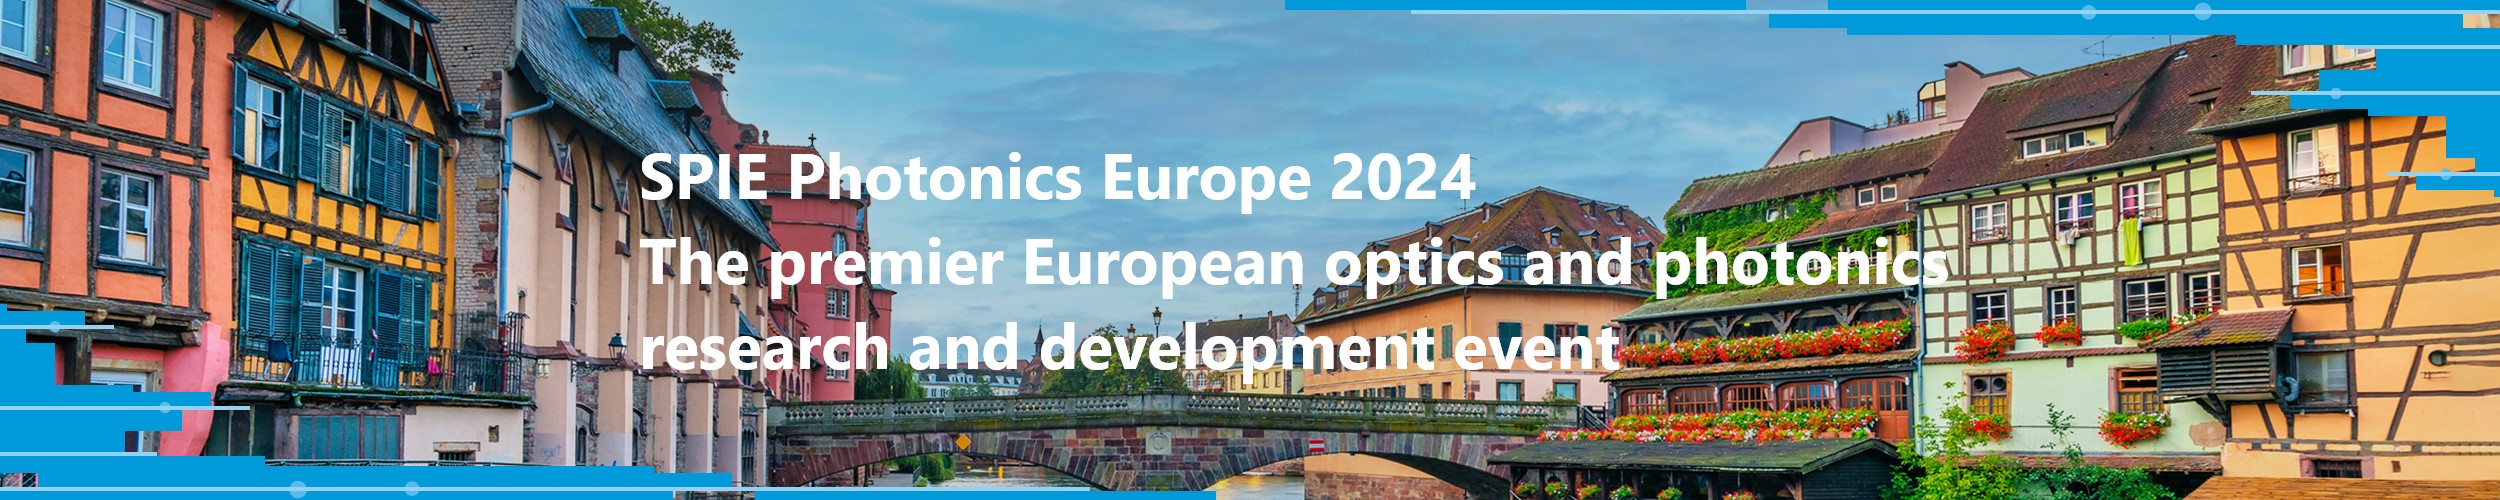 Photonics Europe 2024 OCTLIGHT